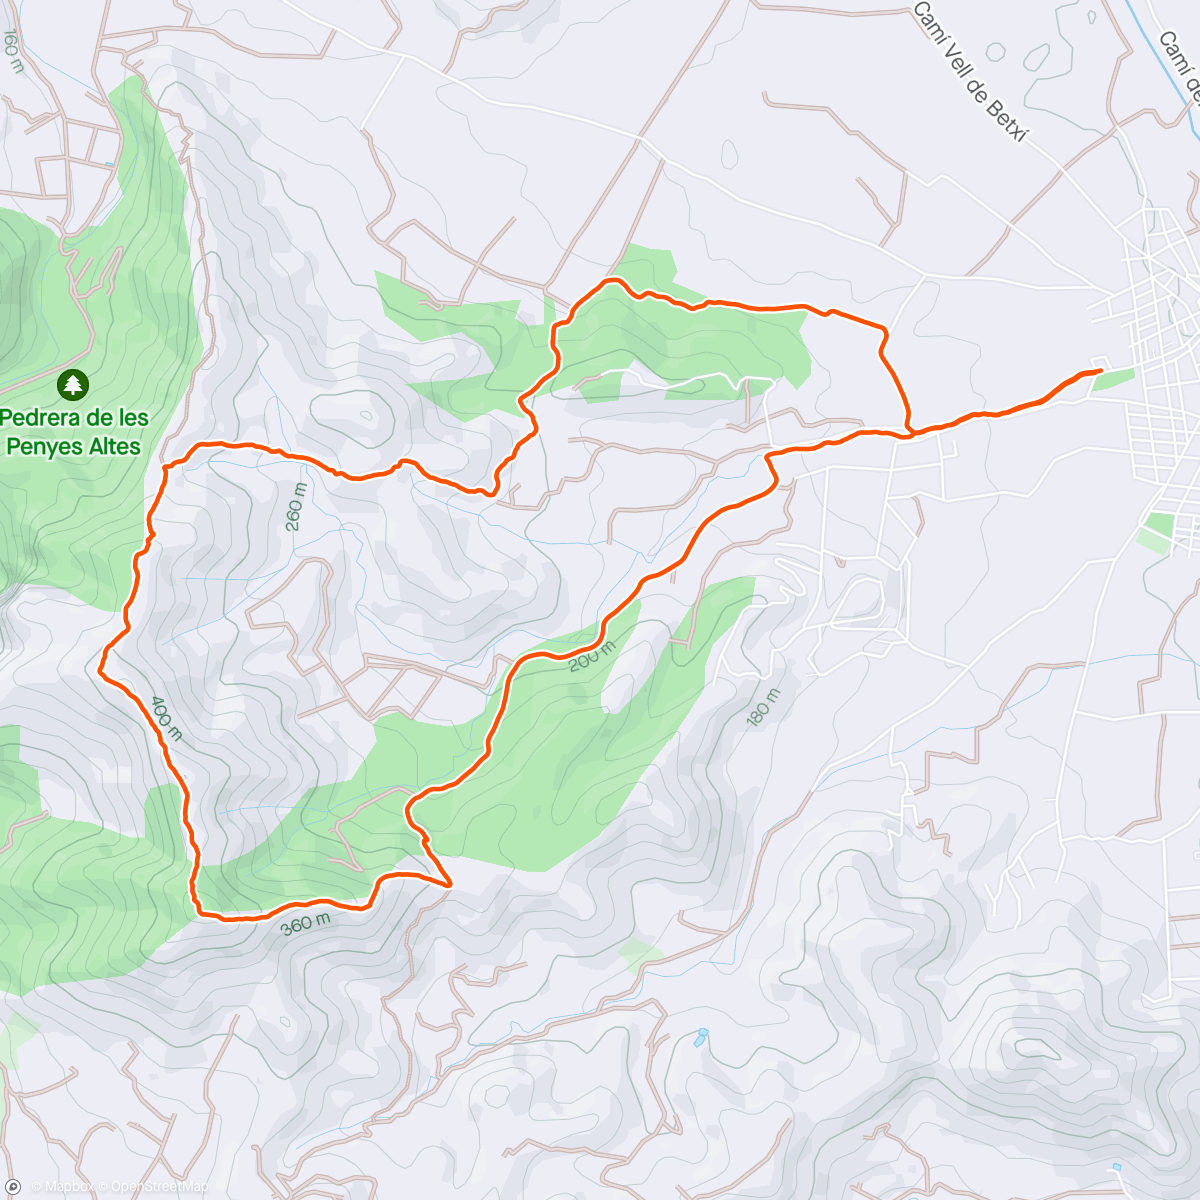 Map of the activity, Volteta en la élite